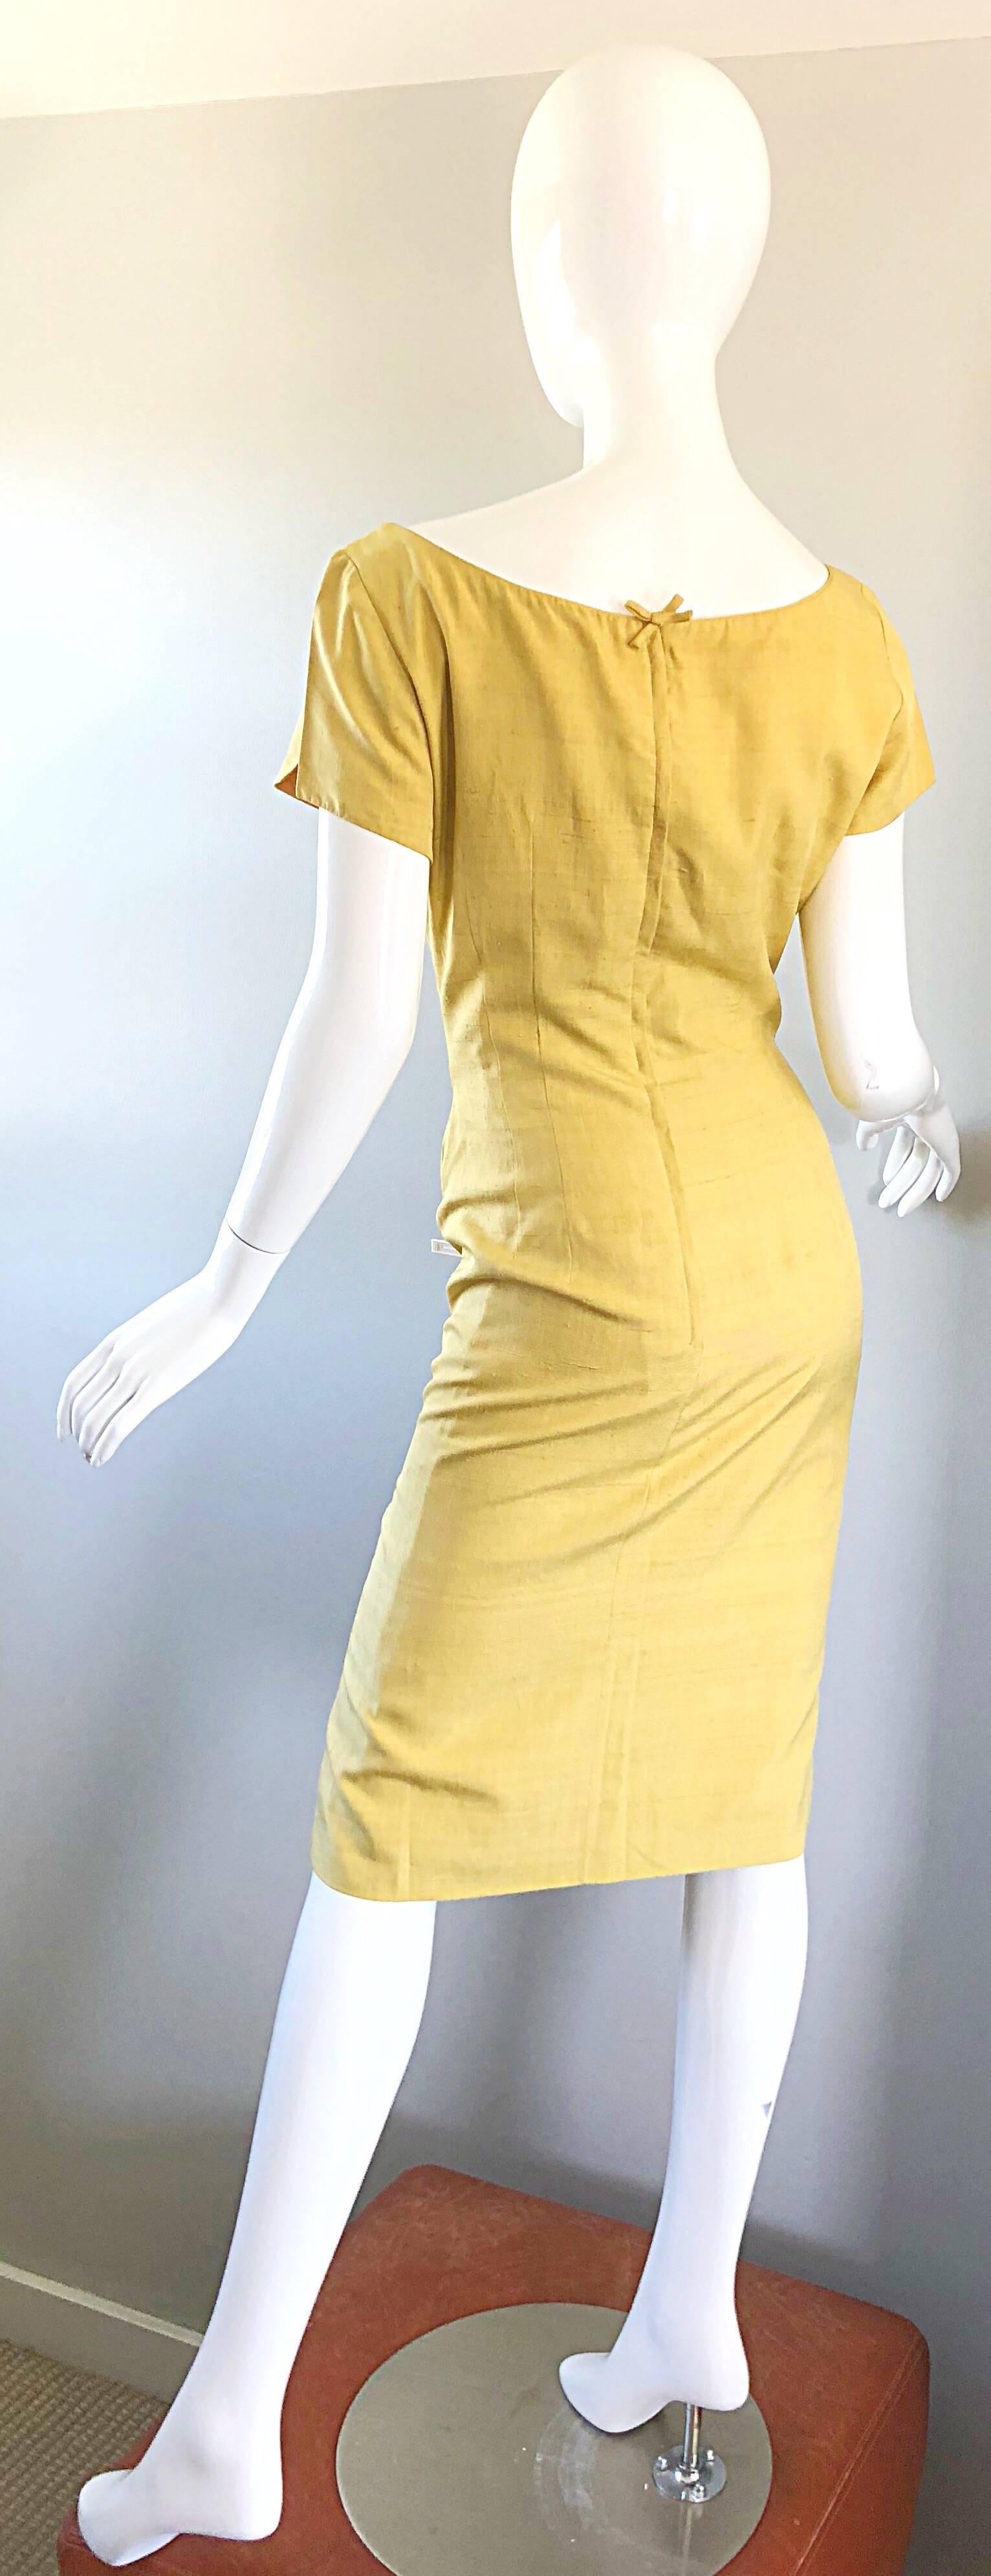 mustard yellow silk dress